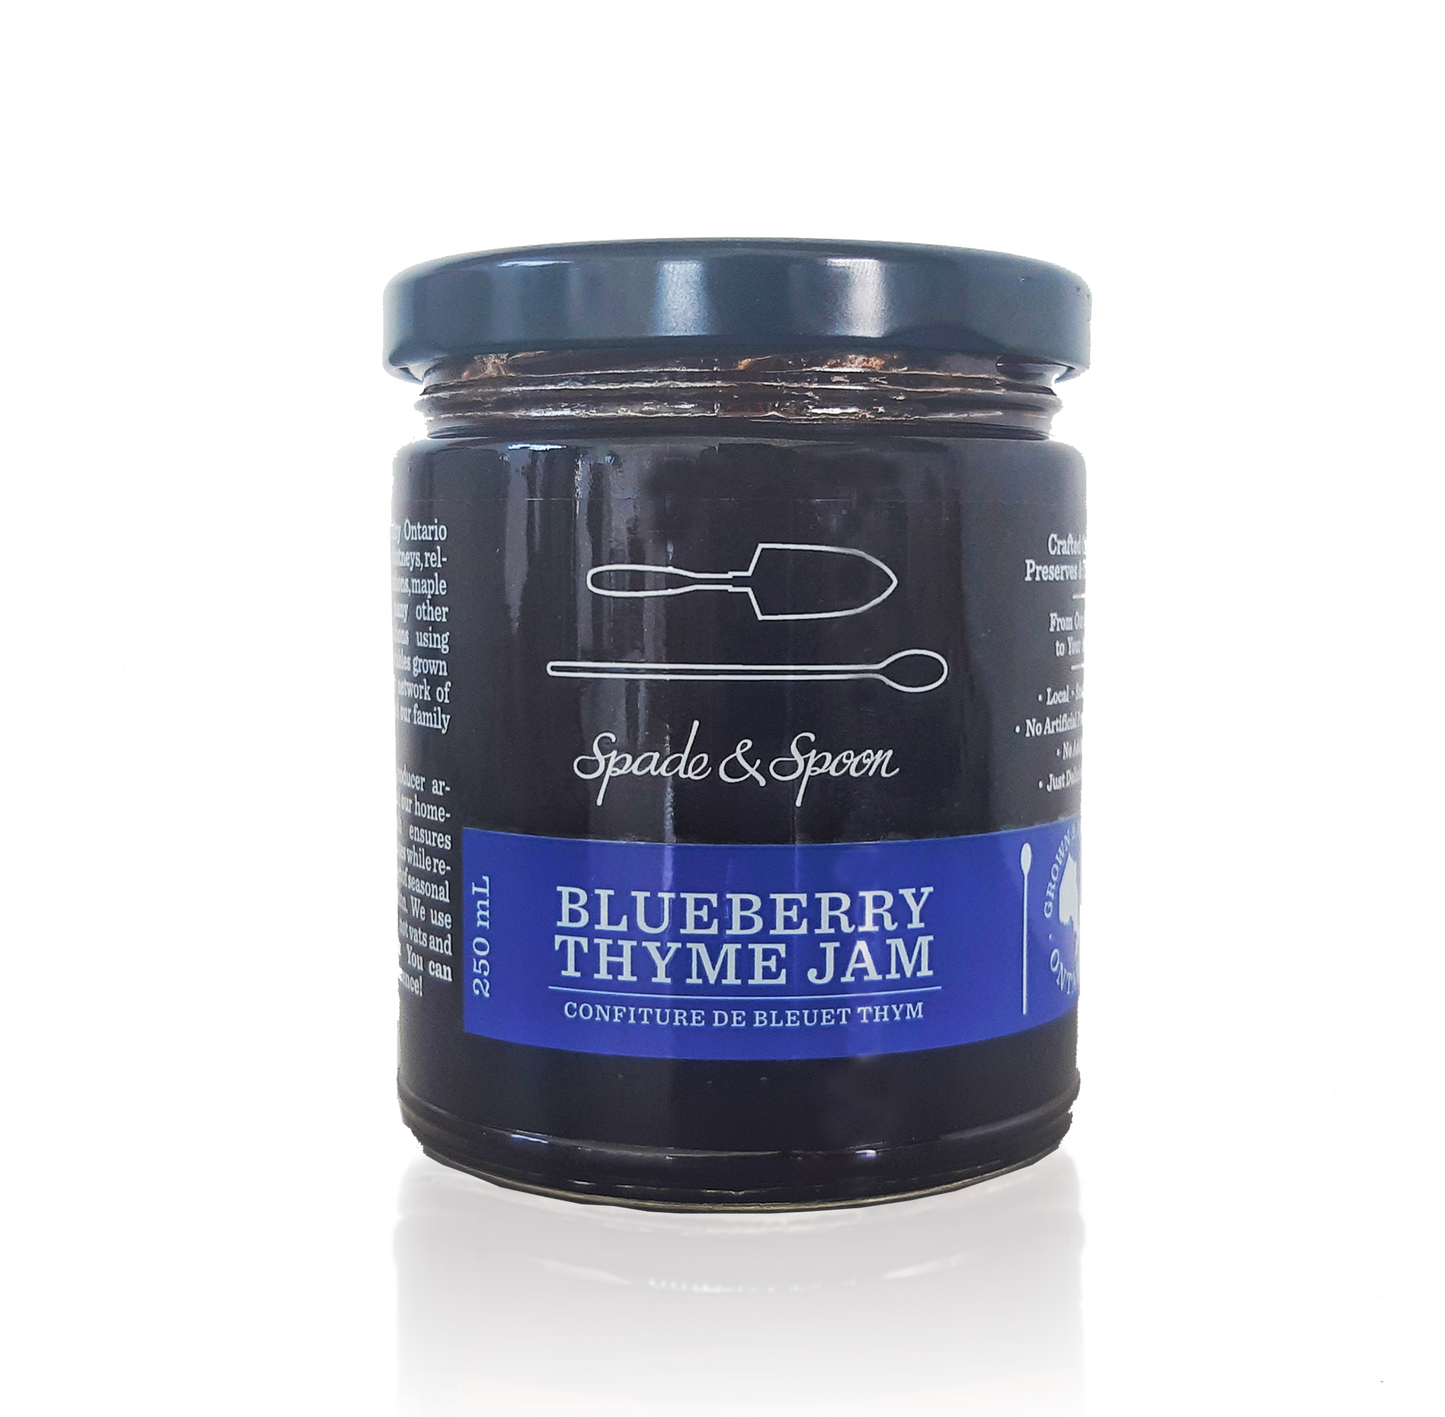 Blueberry Thyme Jam - Spade & Spoon - Ontario Farm Goods